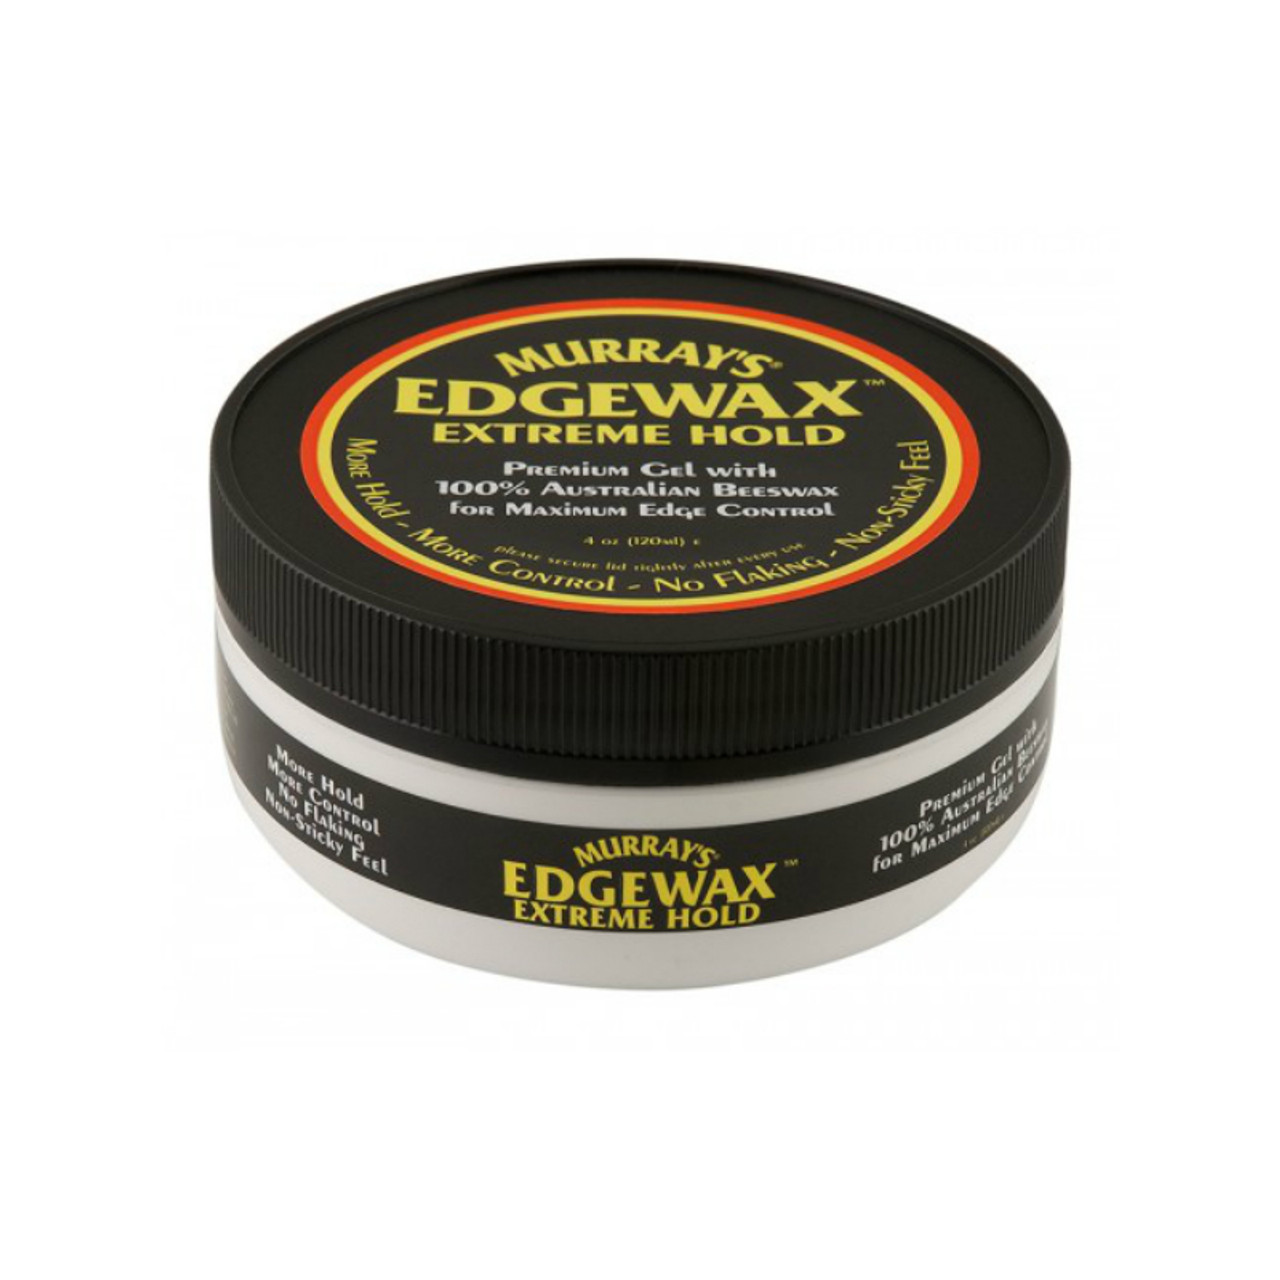  Murray's Edgewax Premium Gel, 4 oz (Pack of 5) : Beauty &  Personal Care